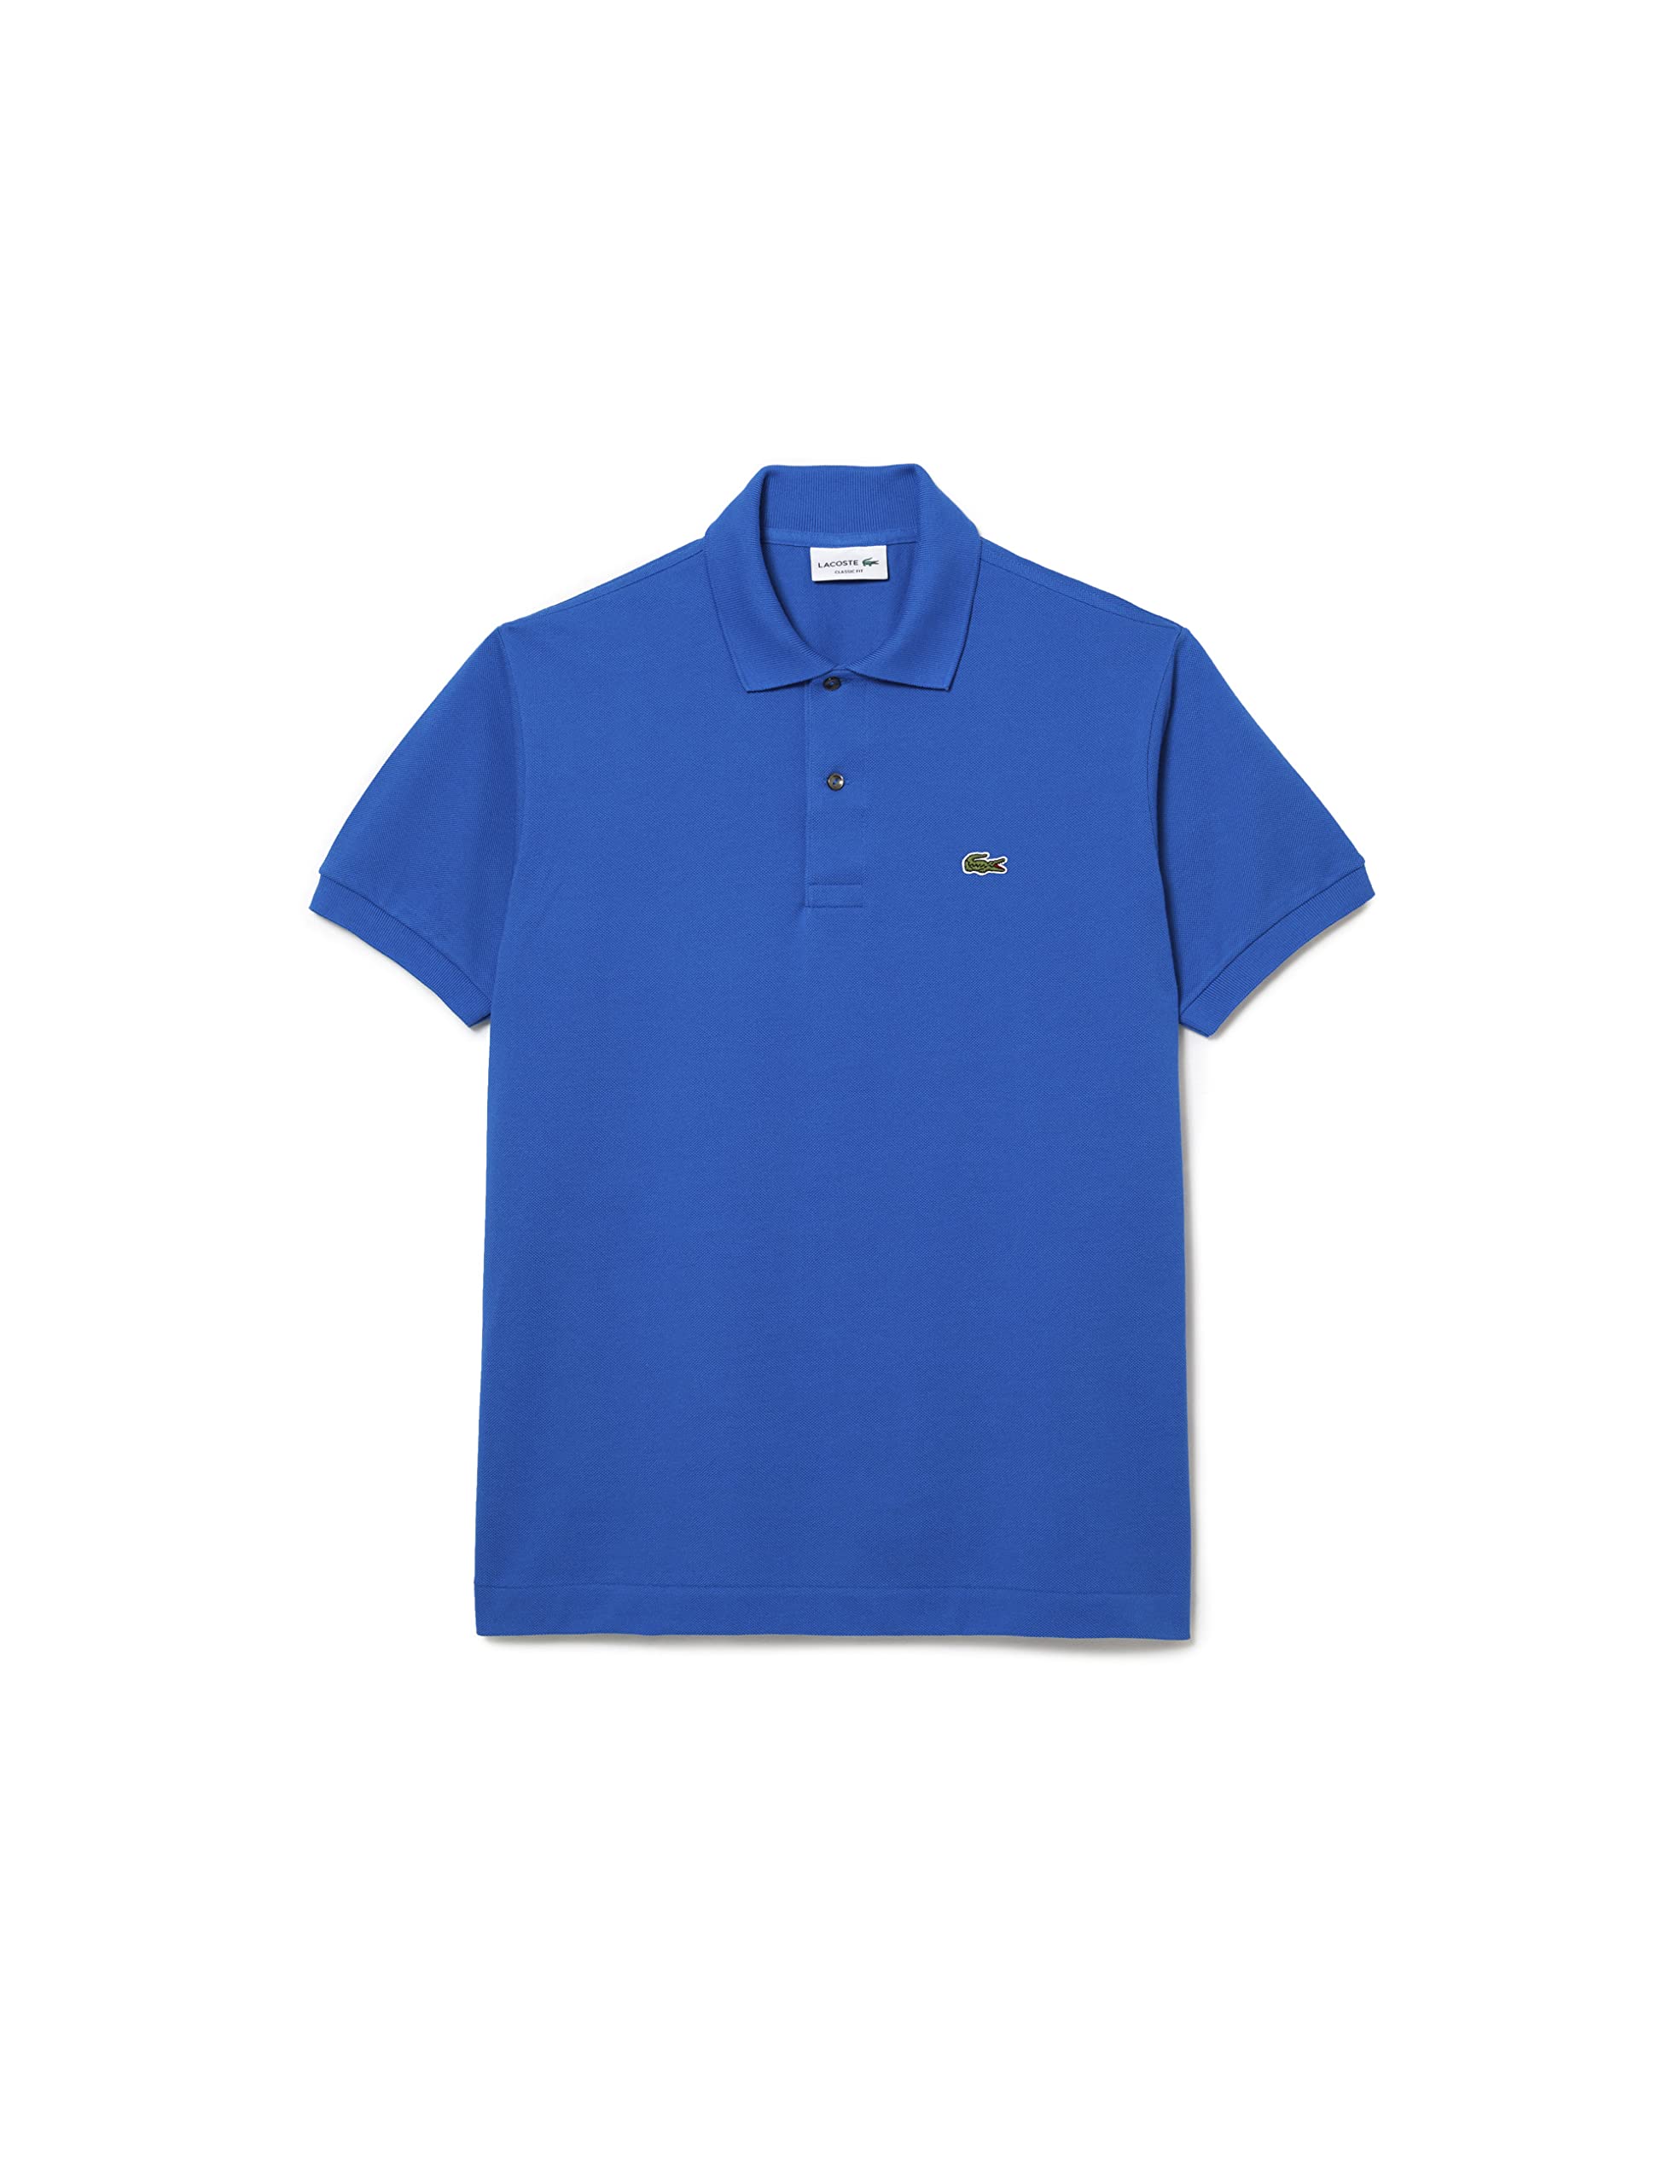 Lacoste Herren Polo-Shirt Kurzarm L1212, Männer Polo-Hemd,2 Knopf,Regular Fit,Blau,6